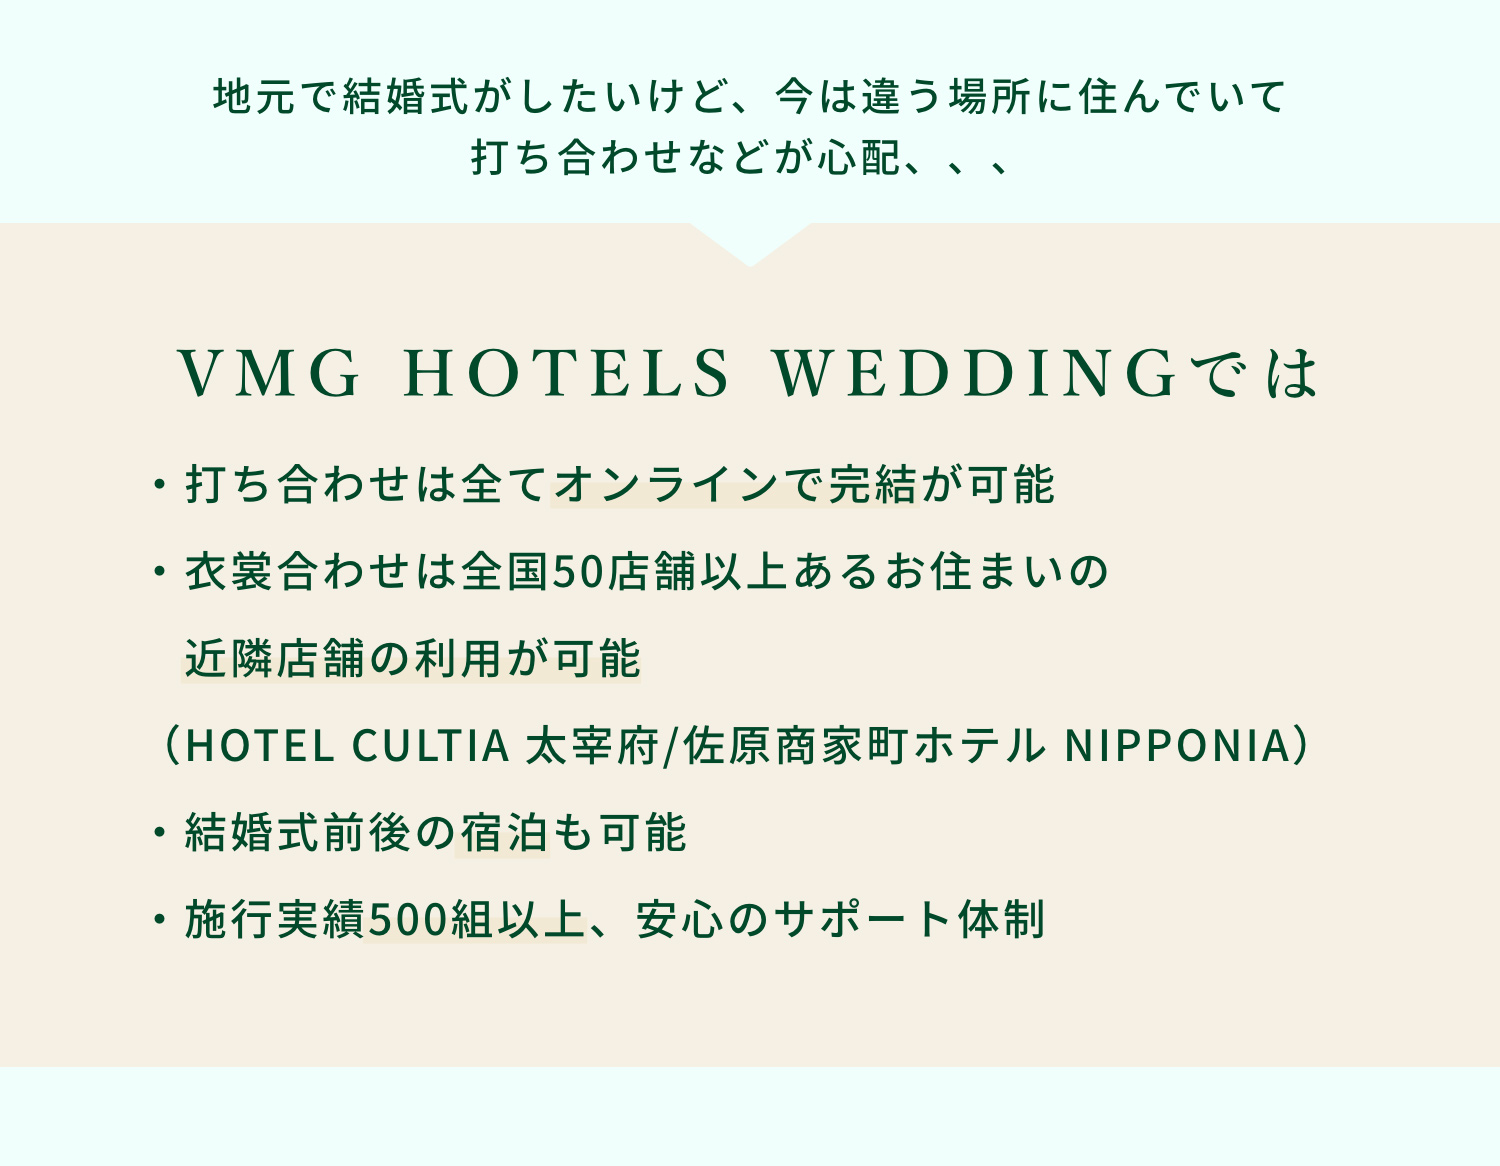 VMG HOTELS WEDDING